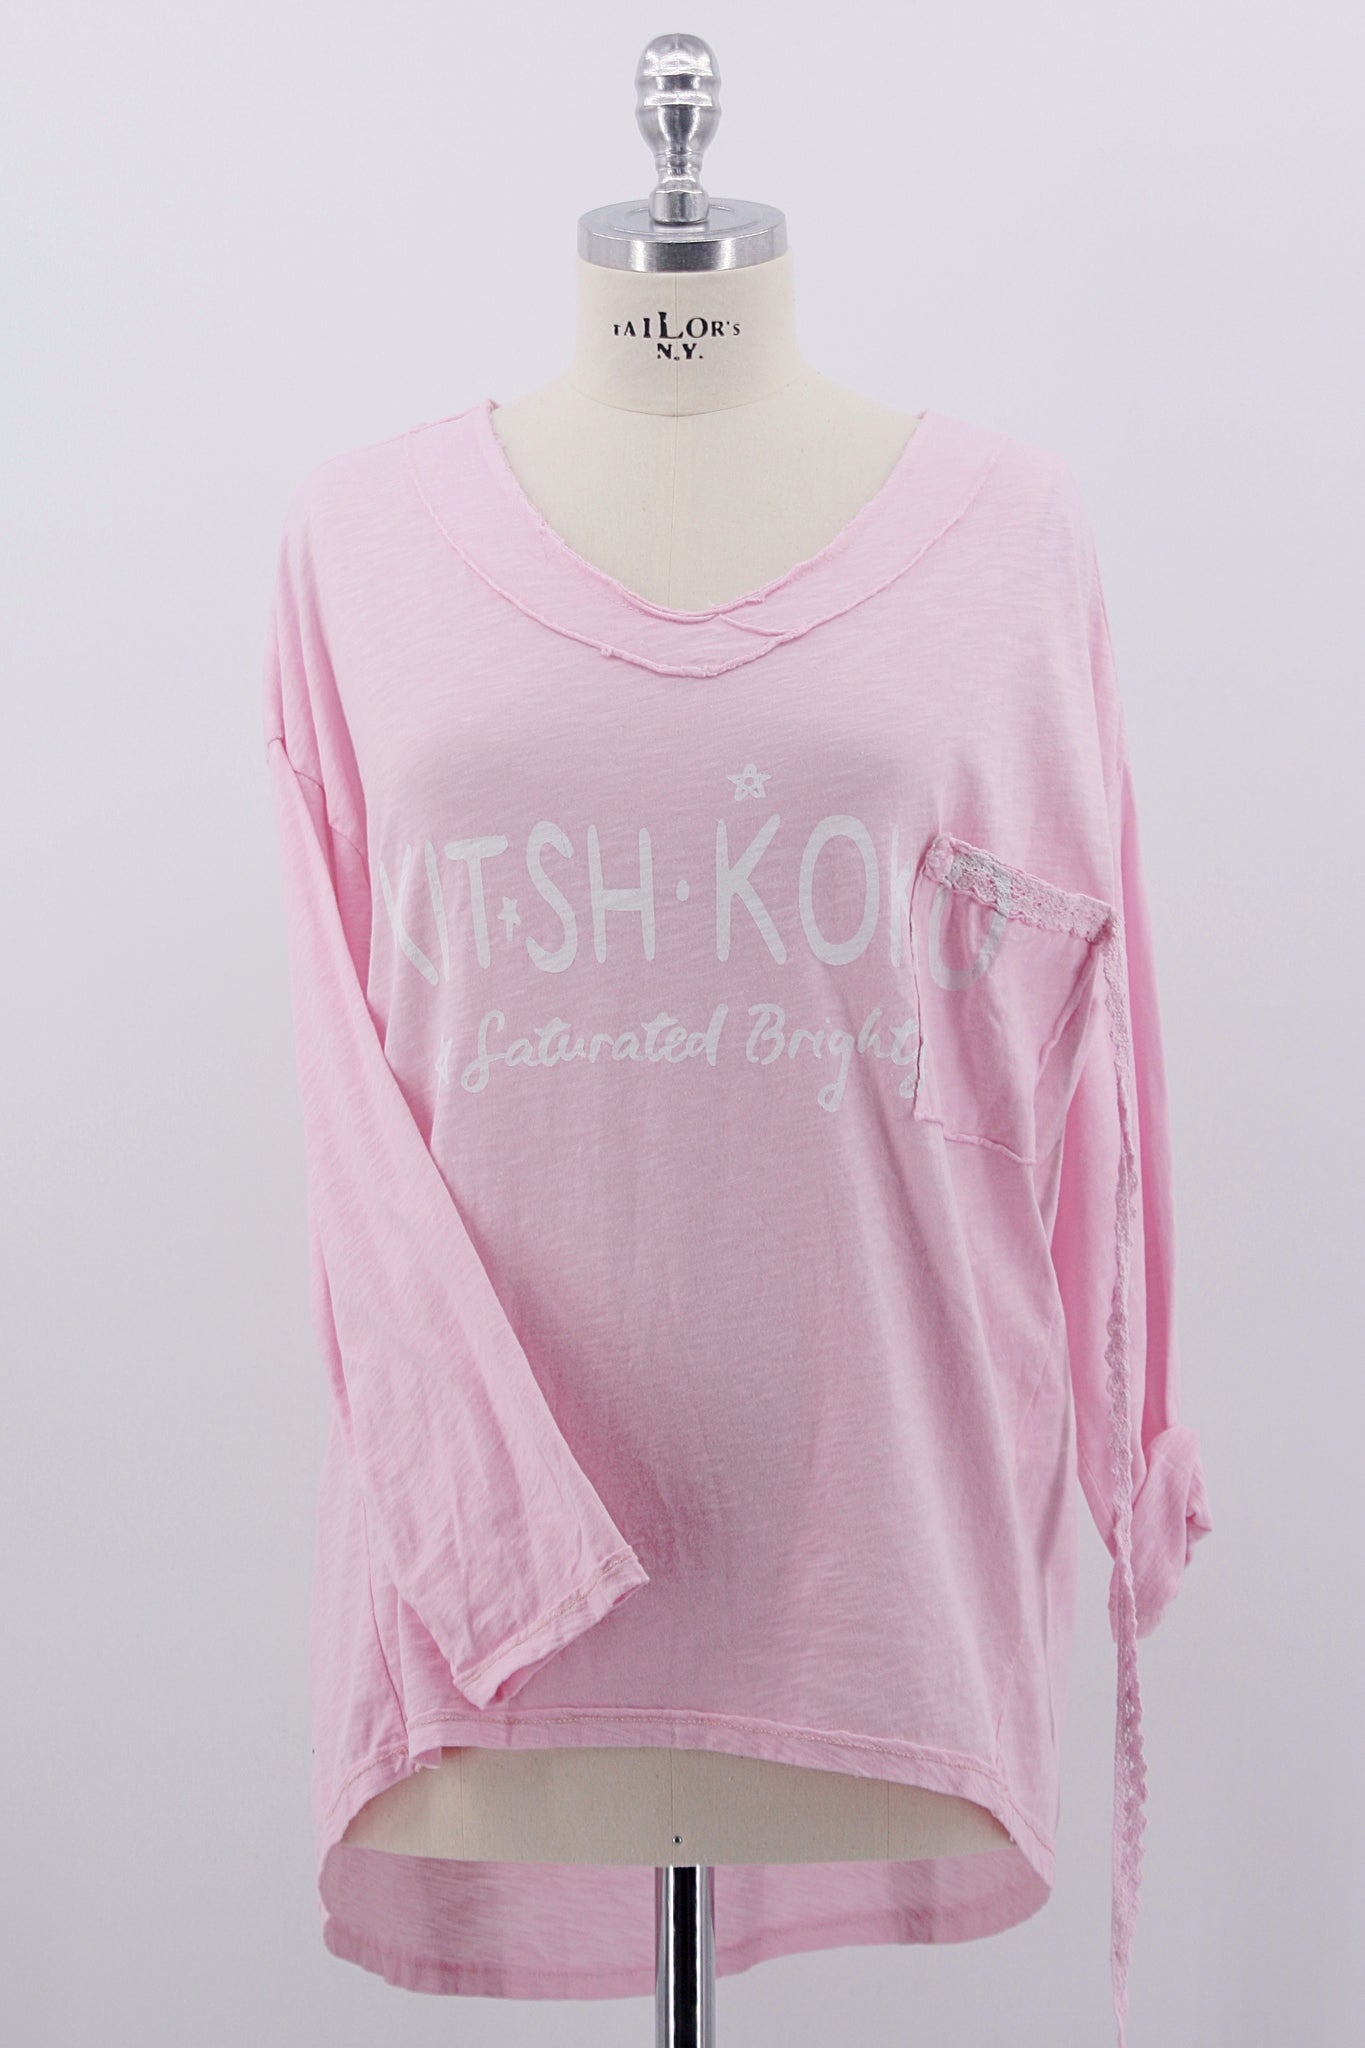 Langam - Shirt "KOKO", rosa